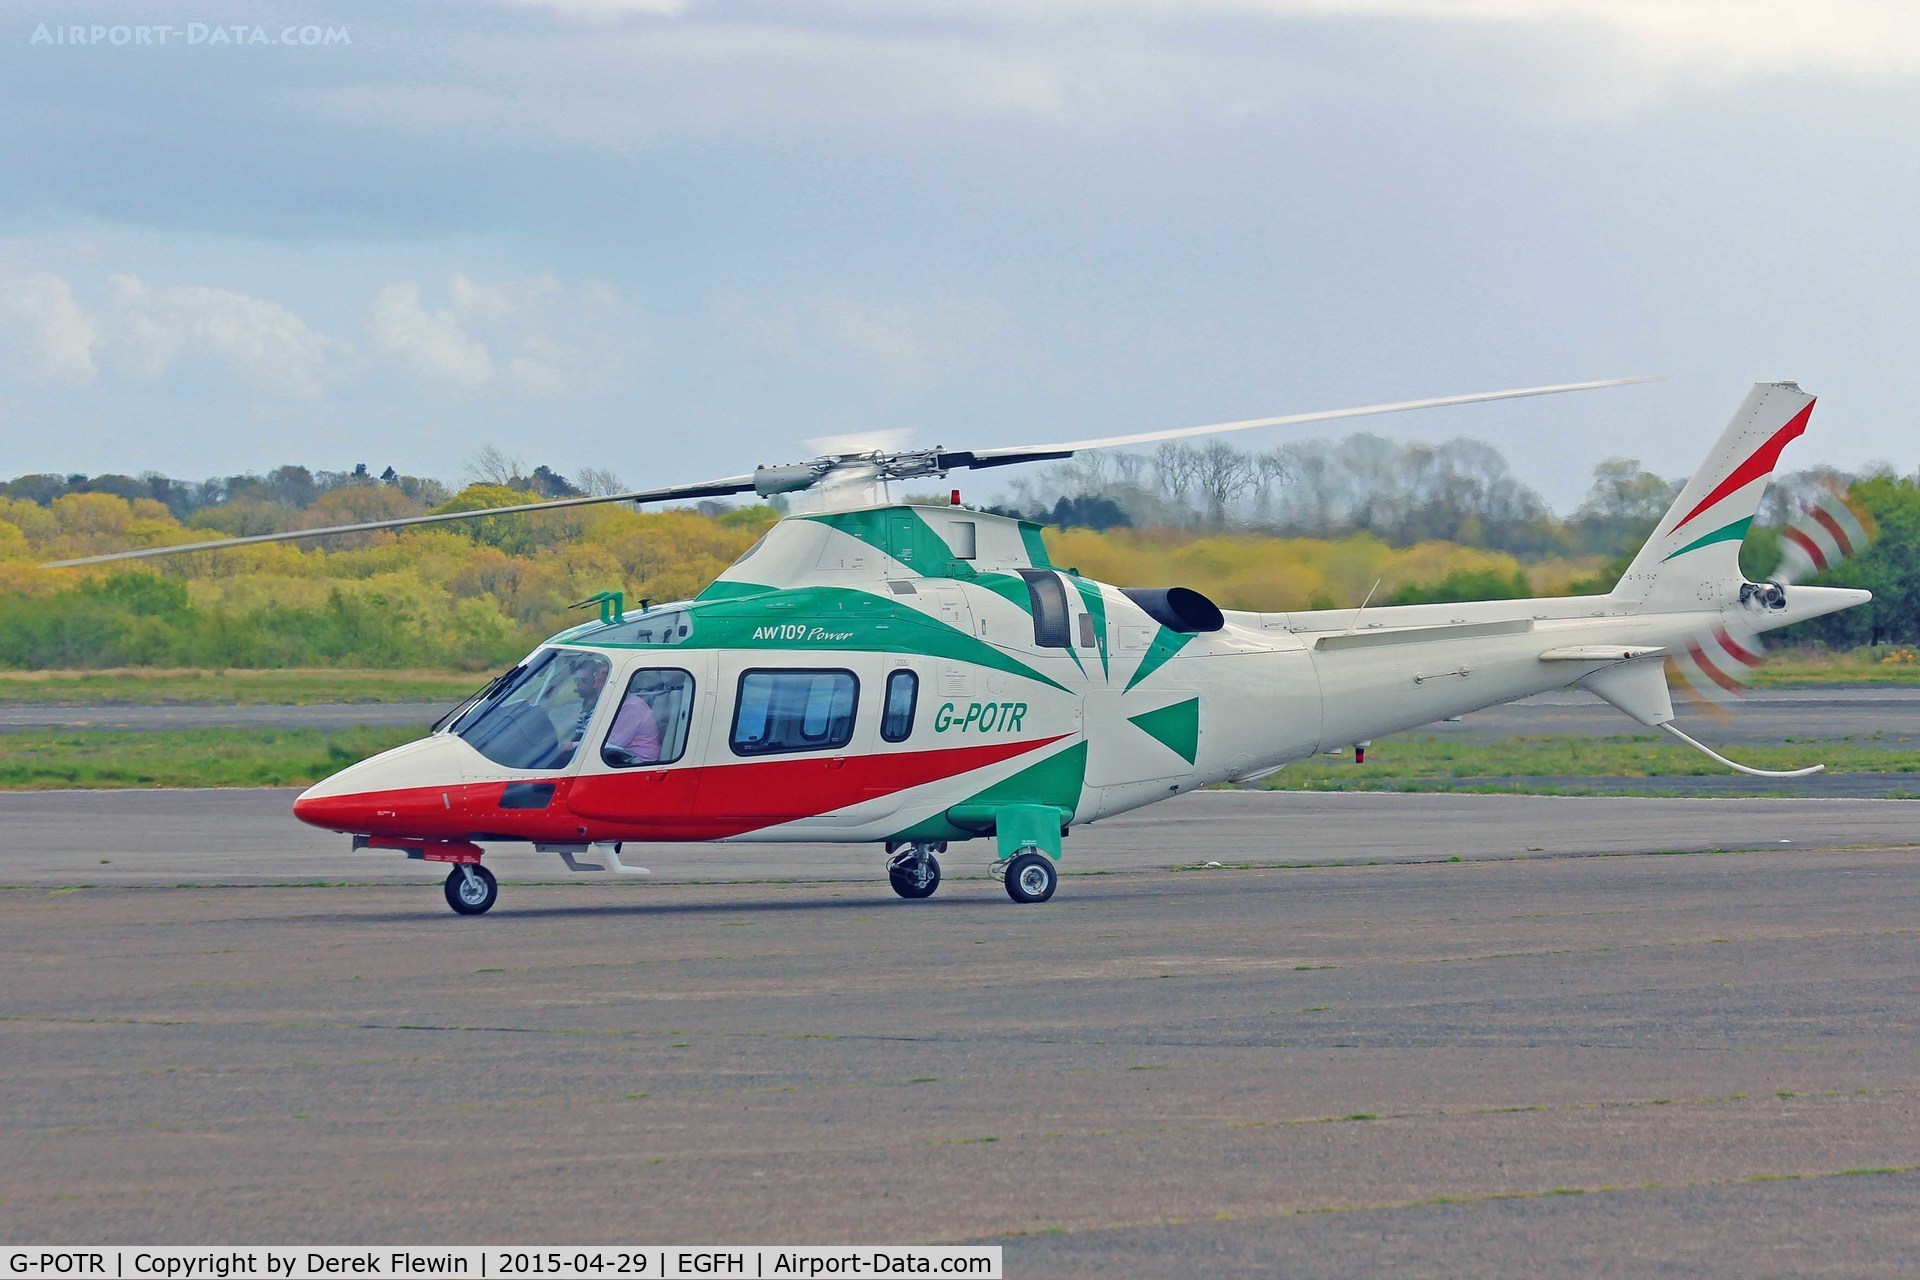 G-POTR, 1999 Agusta A-109E Power C/N 11043, A109E, Welshpool based, seen taxxing.